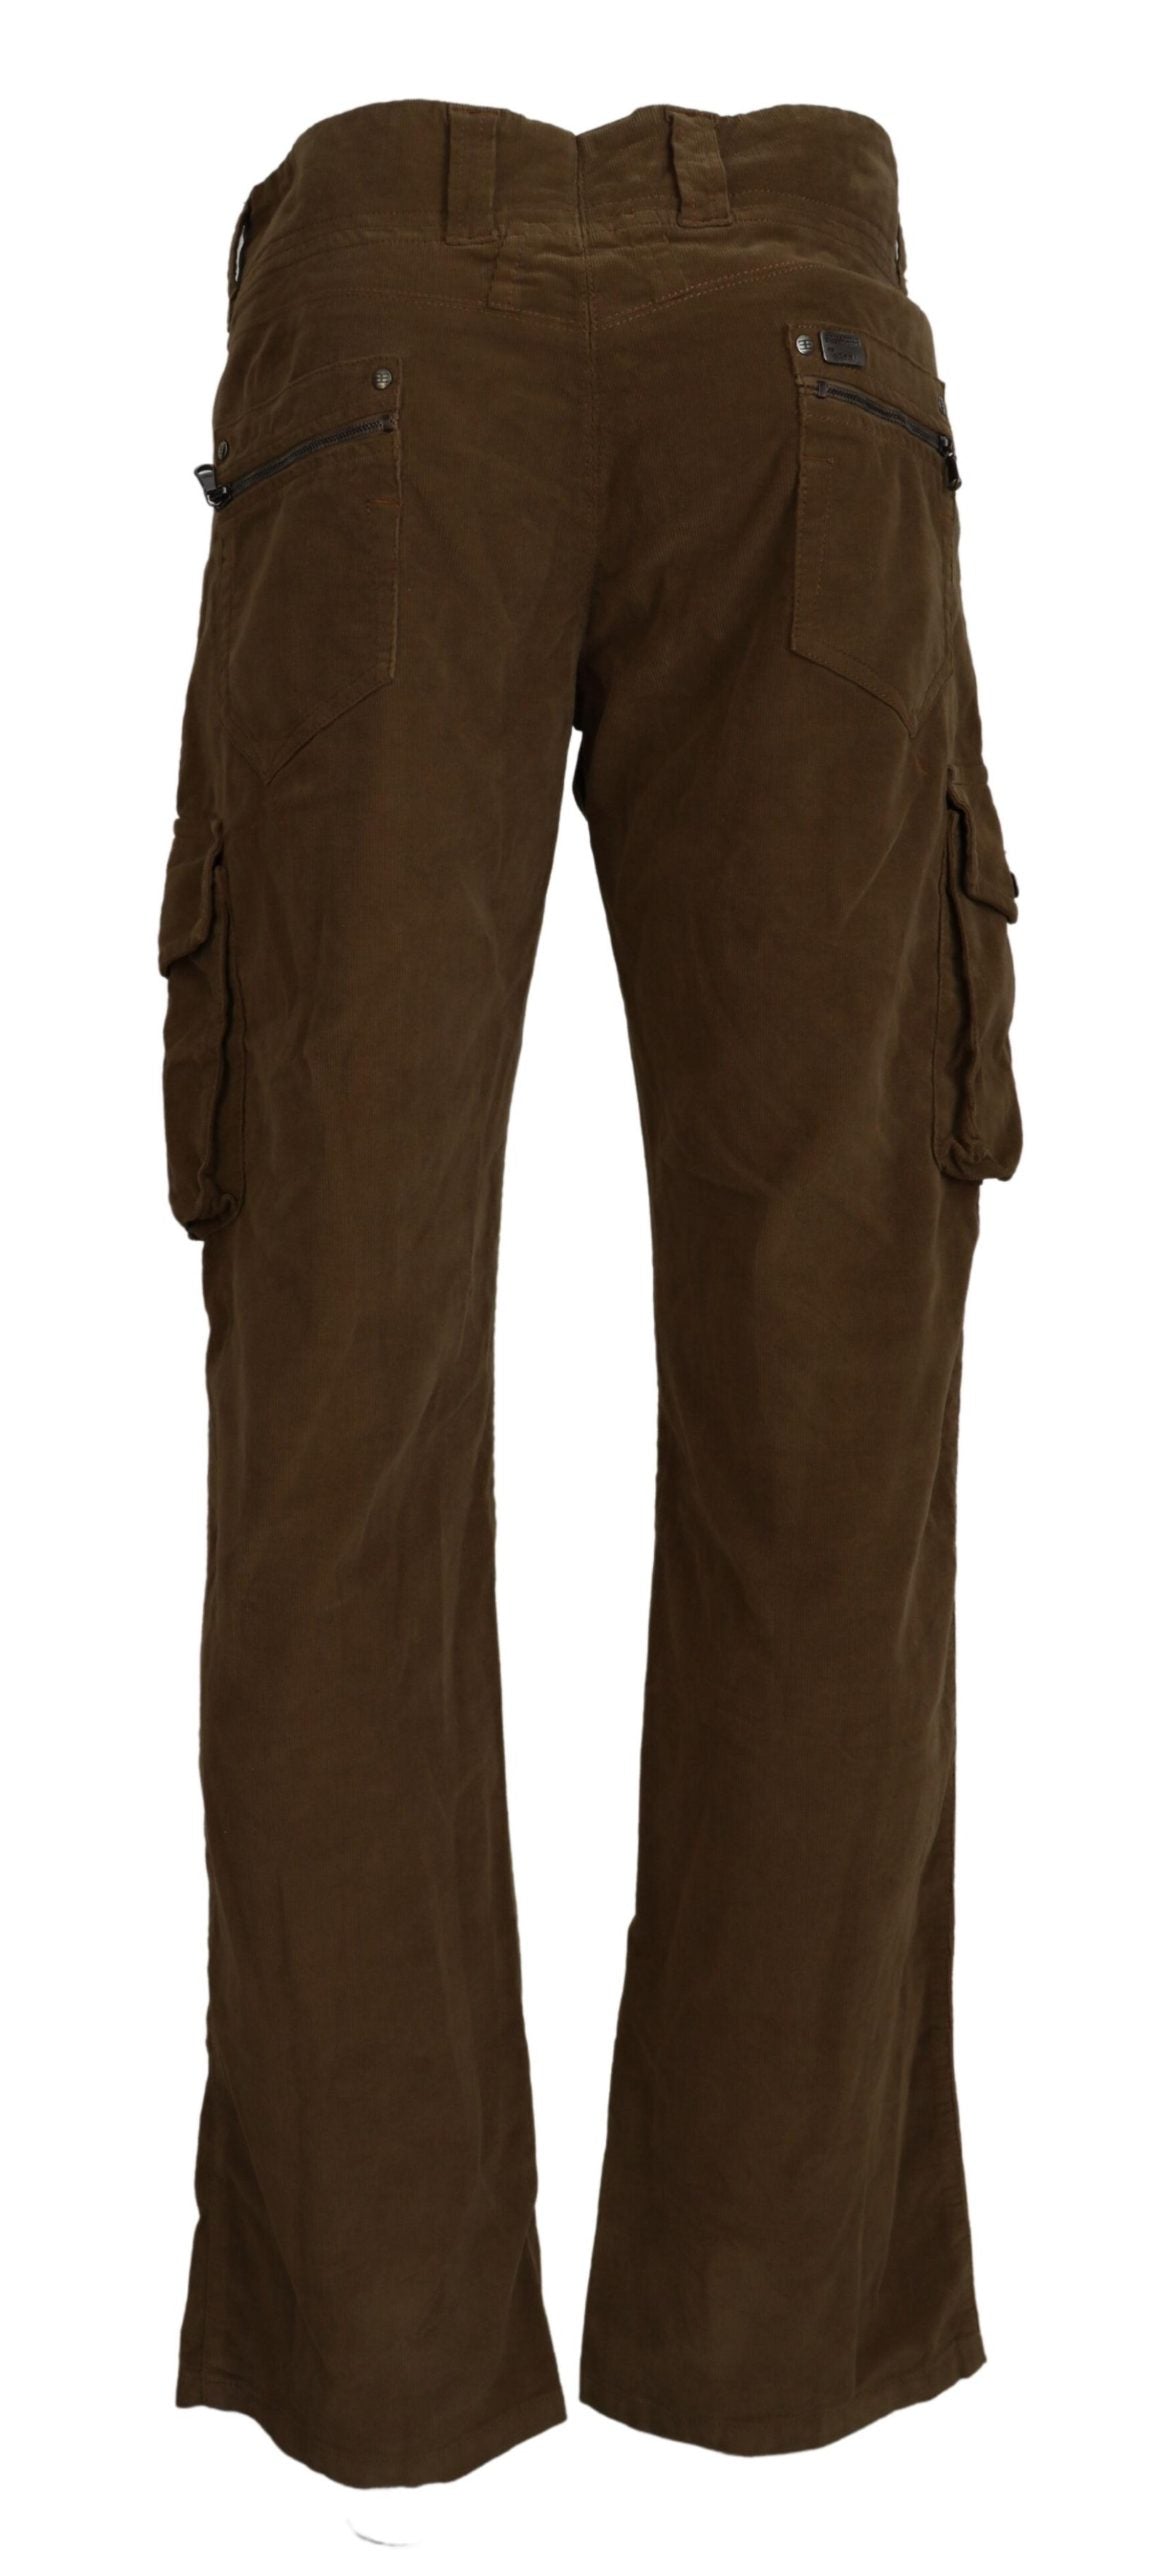 Chic Brown Corduroy Cargo Pants